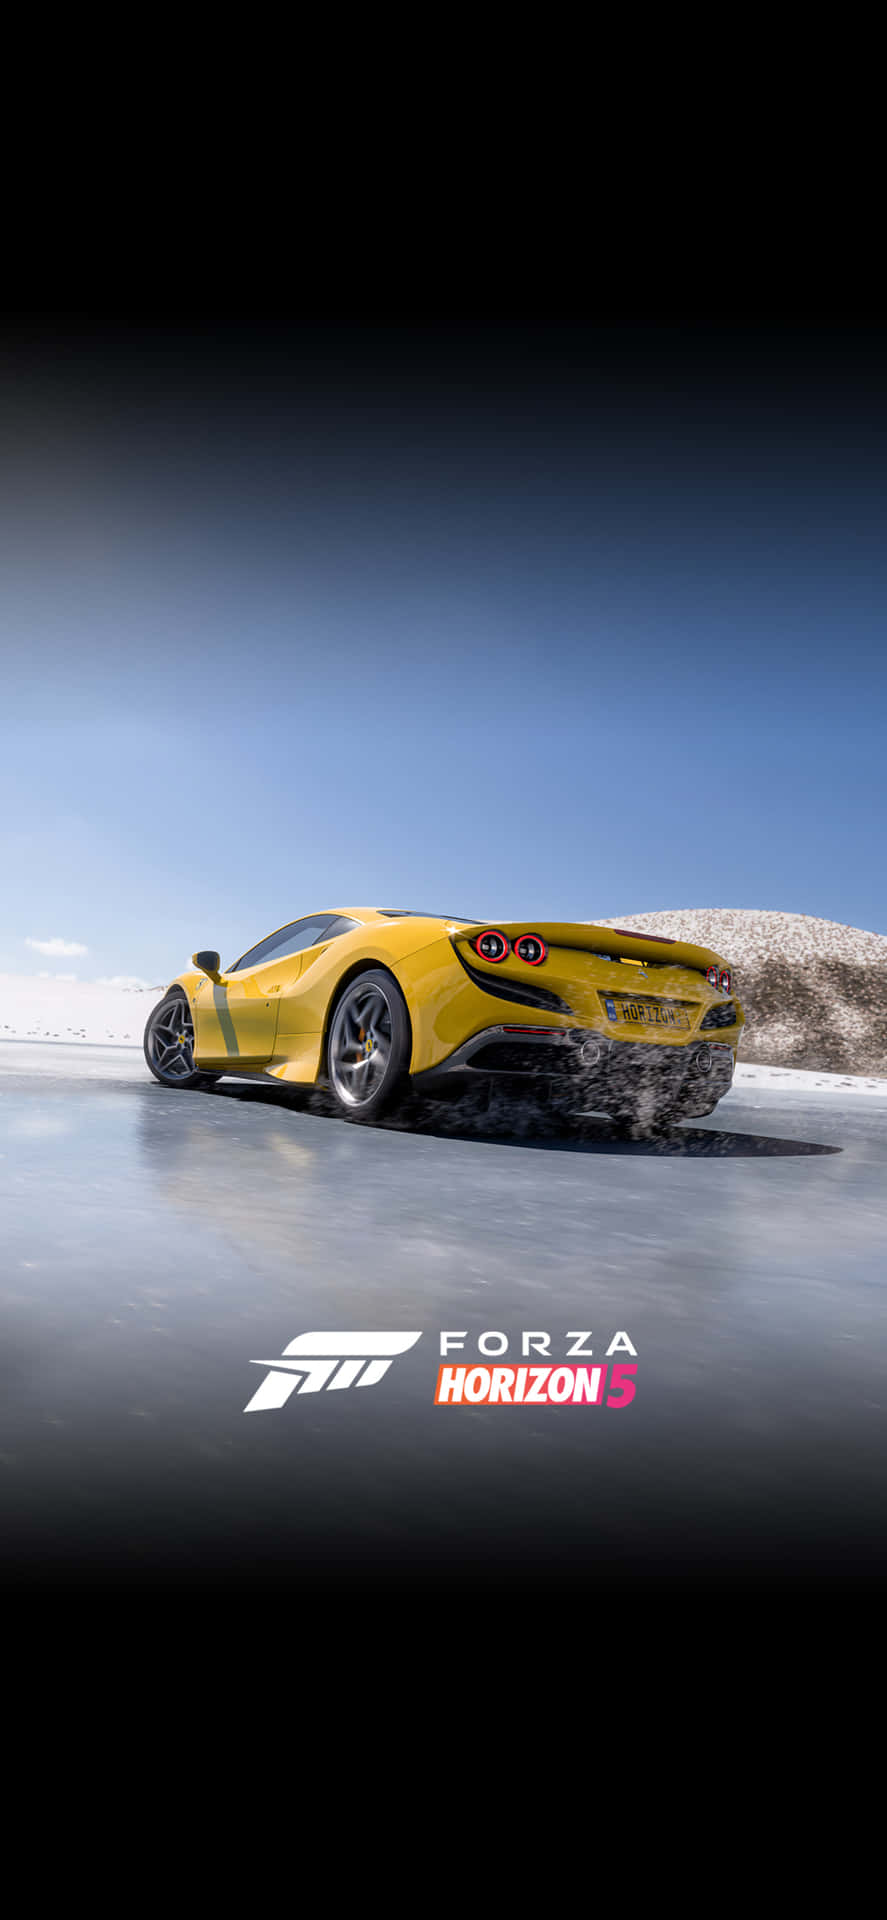 Fondode Pantalla De Forza Motorsport 7 Con Un Lamborghini Acelerando En Un Iphone X.